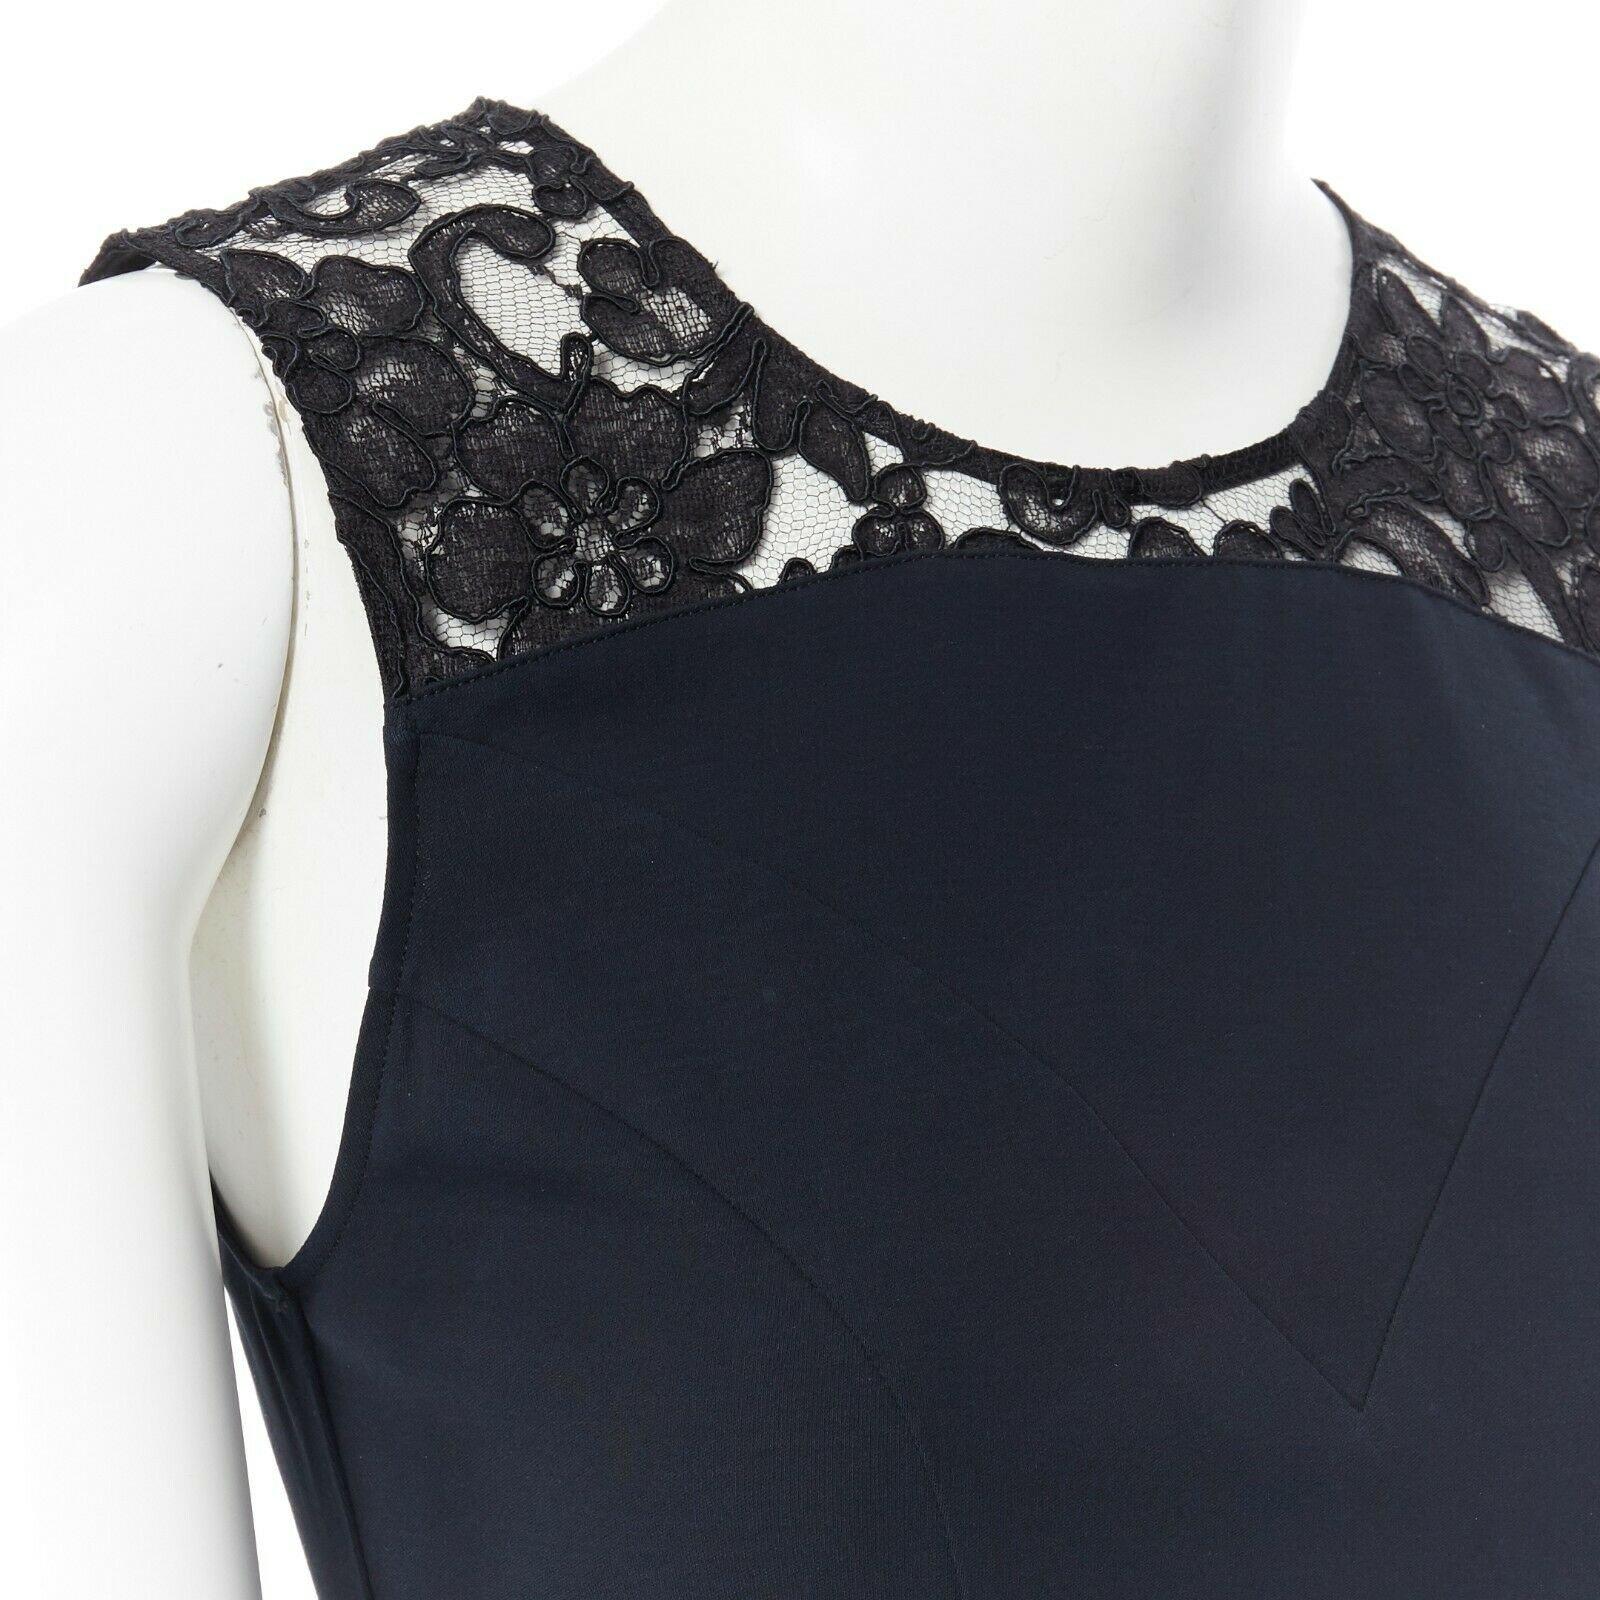 CHANEL navy blue 100% cotton illusion neckline black lace sleeveless top FR36 4